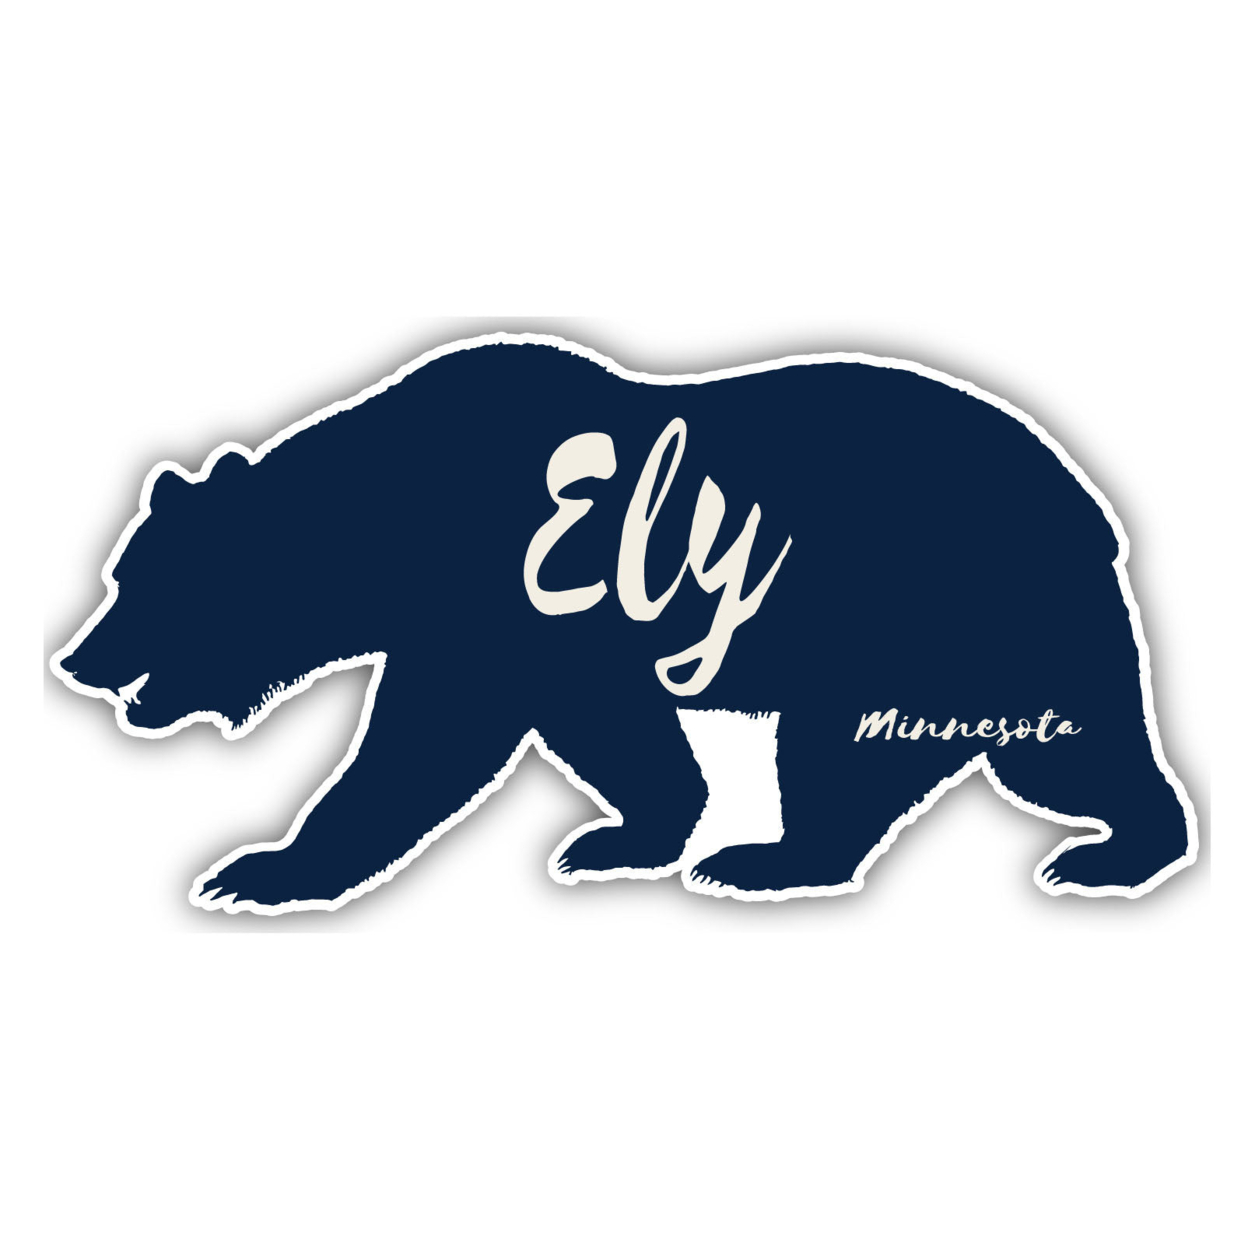 Ely Minnesota Souvenir Decorative Stickers (Choose Theme And Size) - Single Unit, 8-Inch, Tent